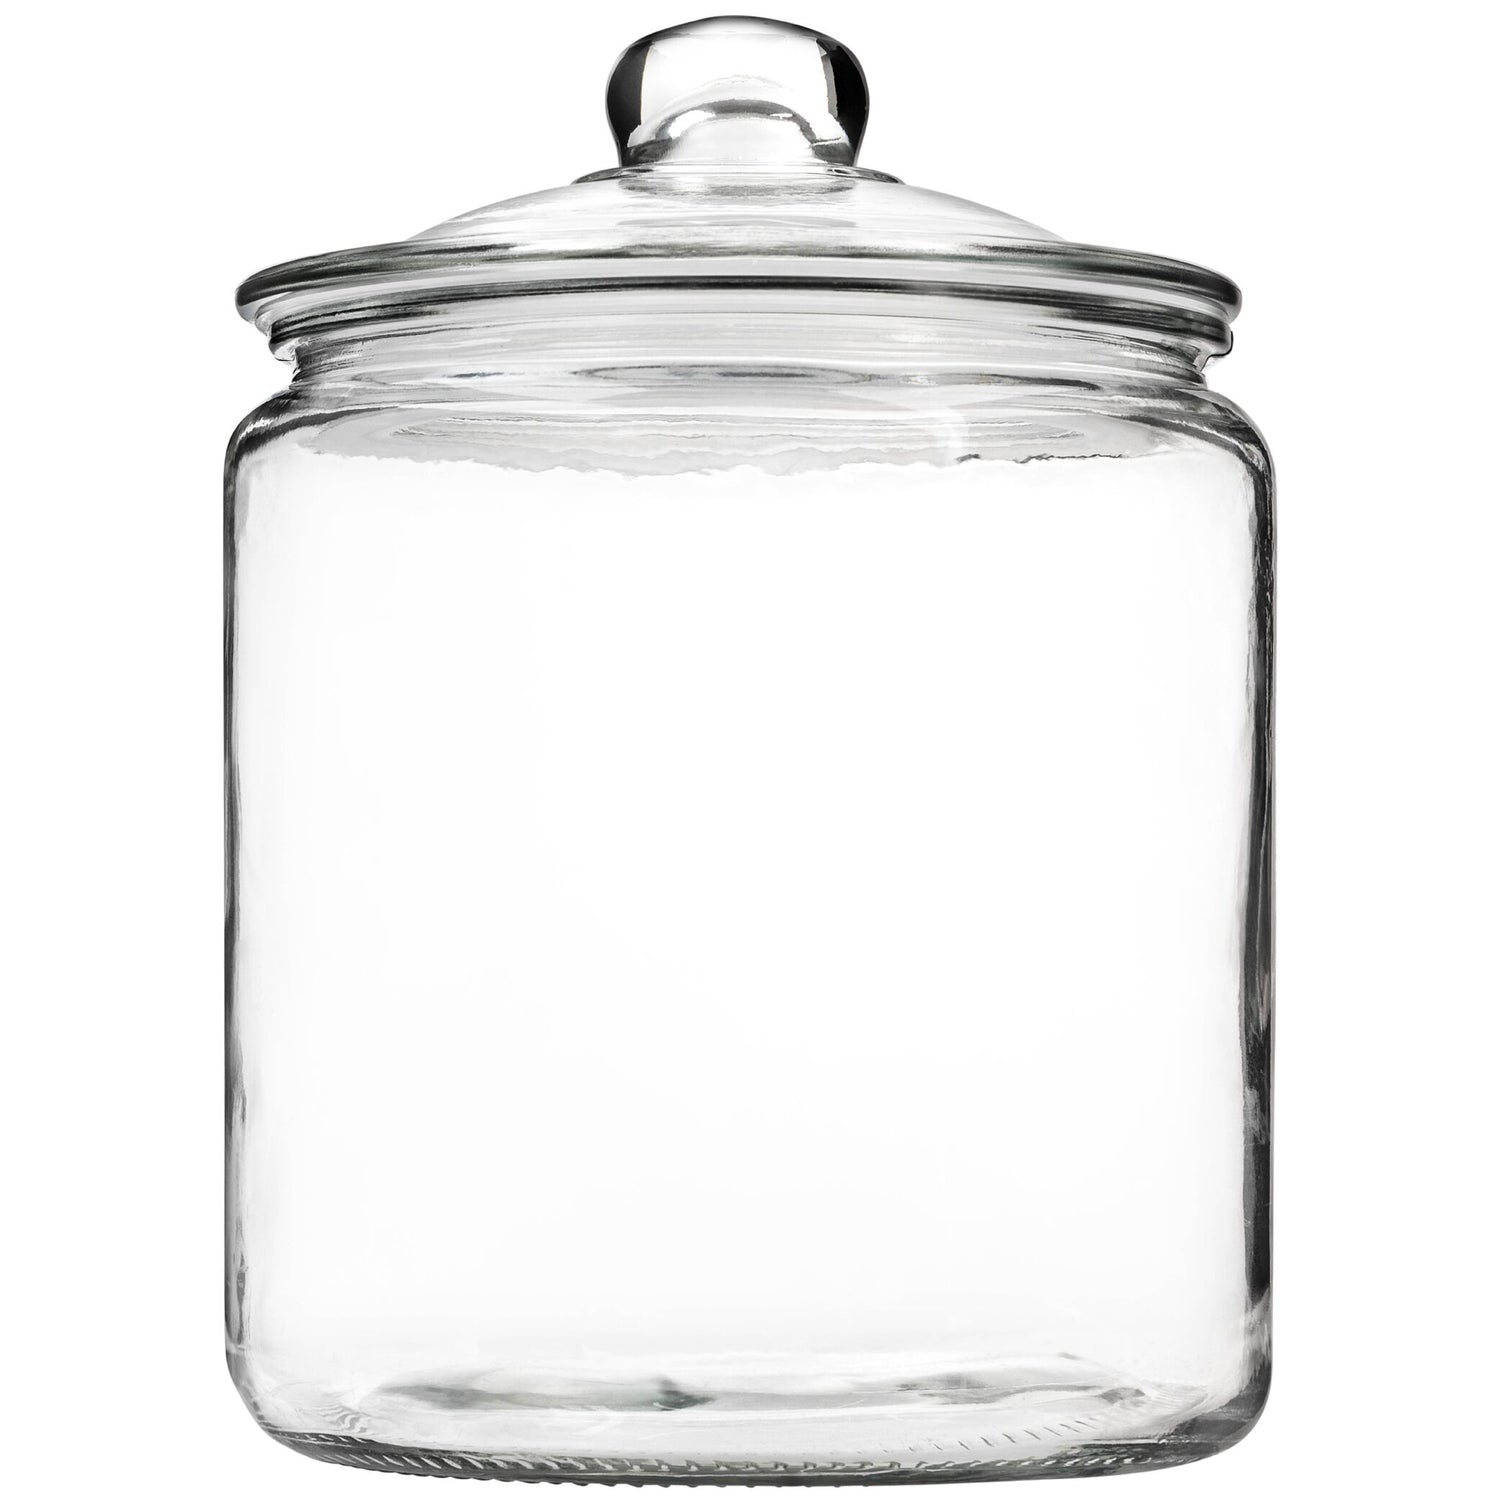 Wdshcr Cookie Jars Stock Glass Cookie Jar (1 Pack) - Flat Bottom